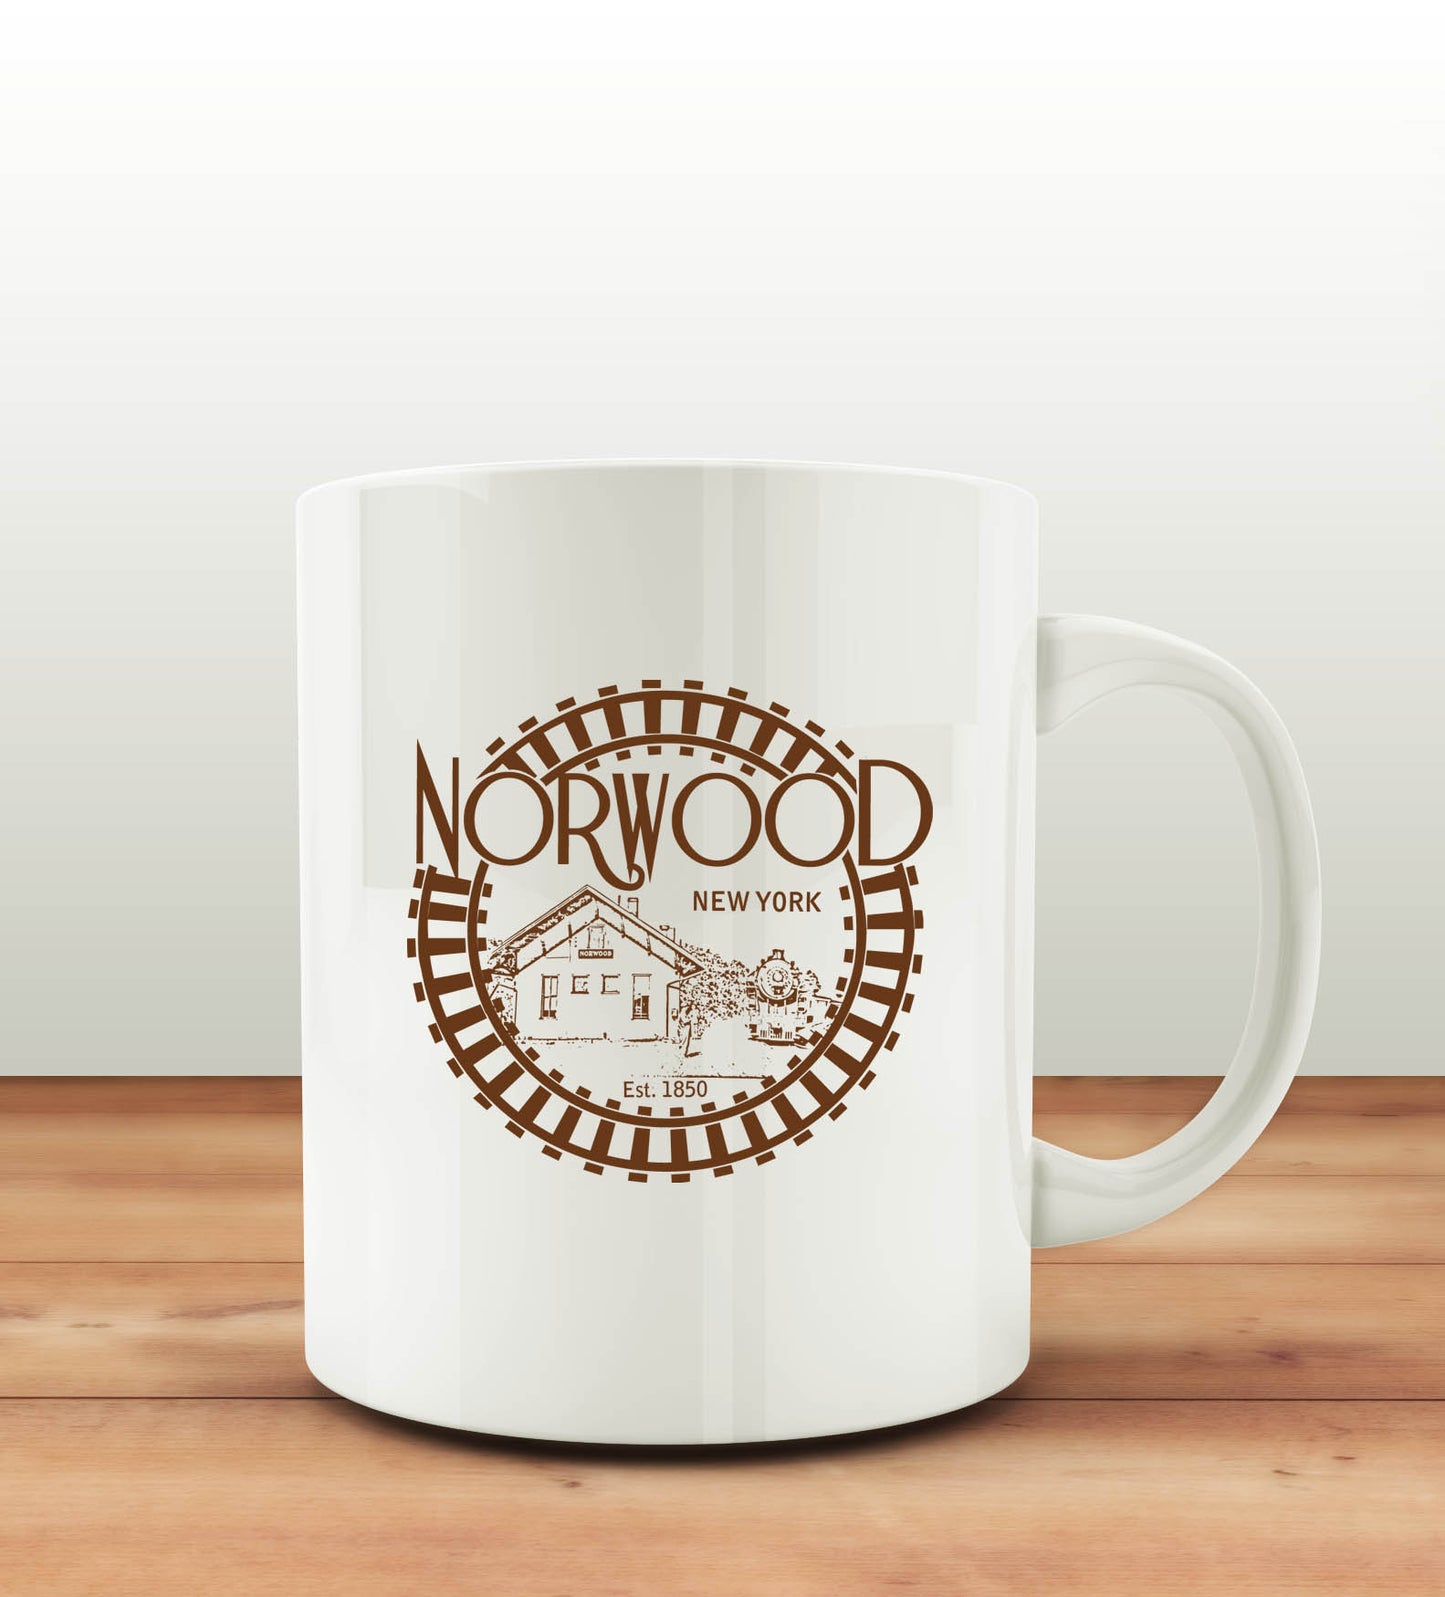 Norwood Ceramic Coffee Mug